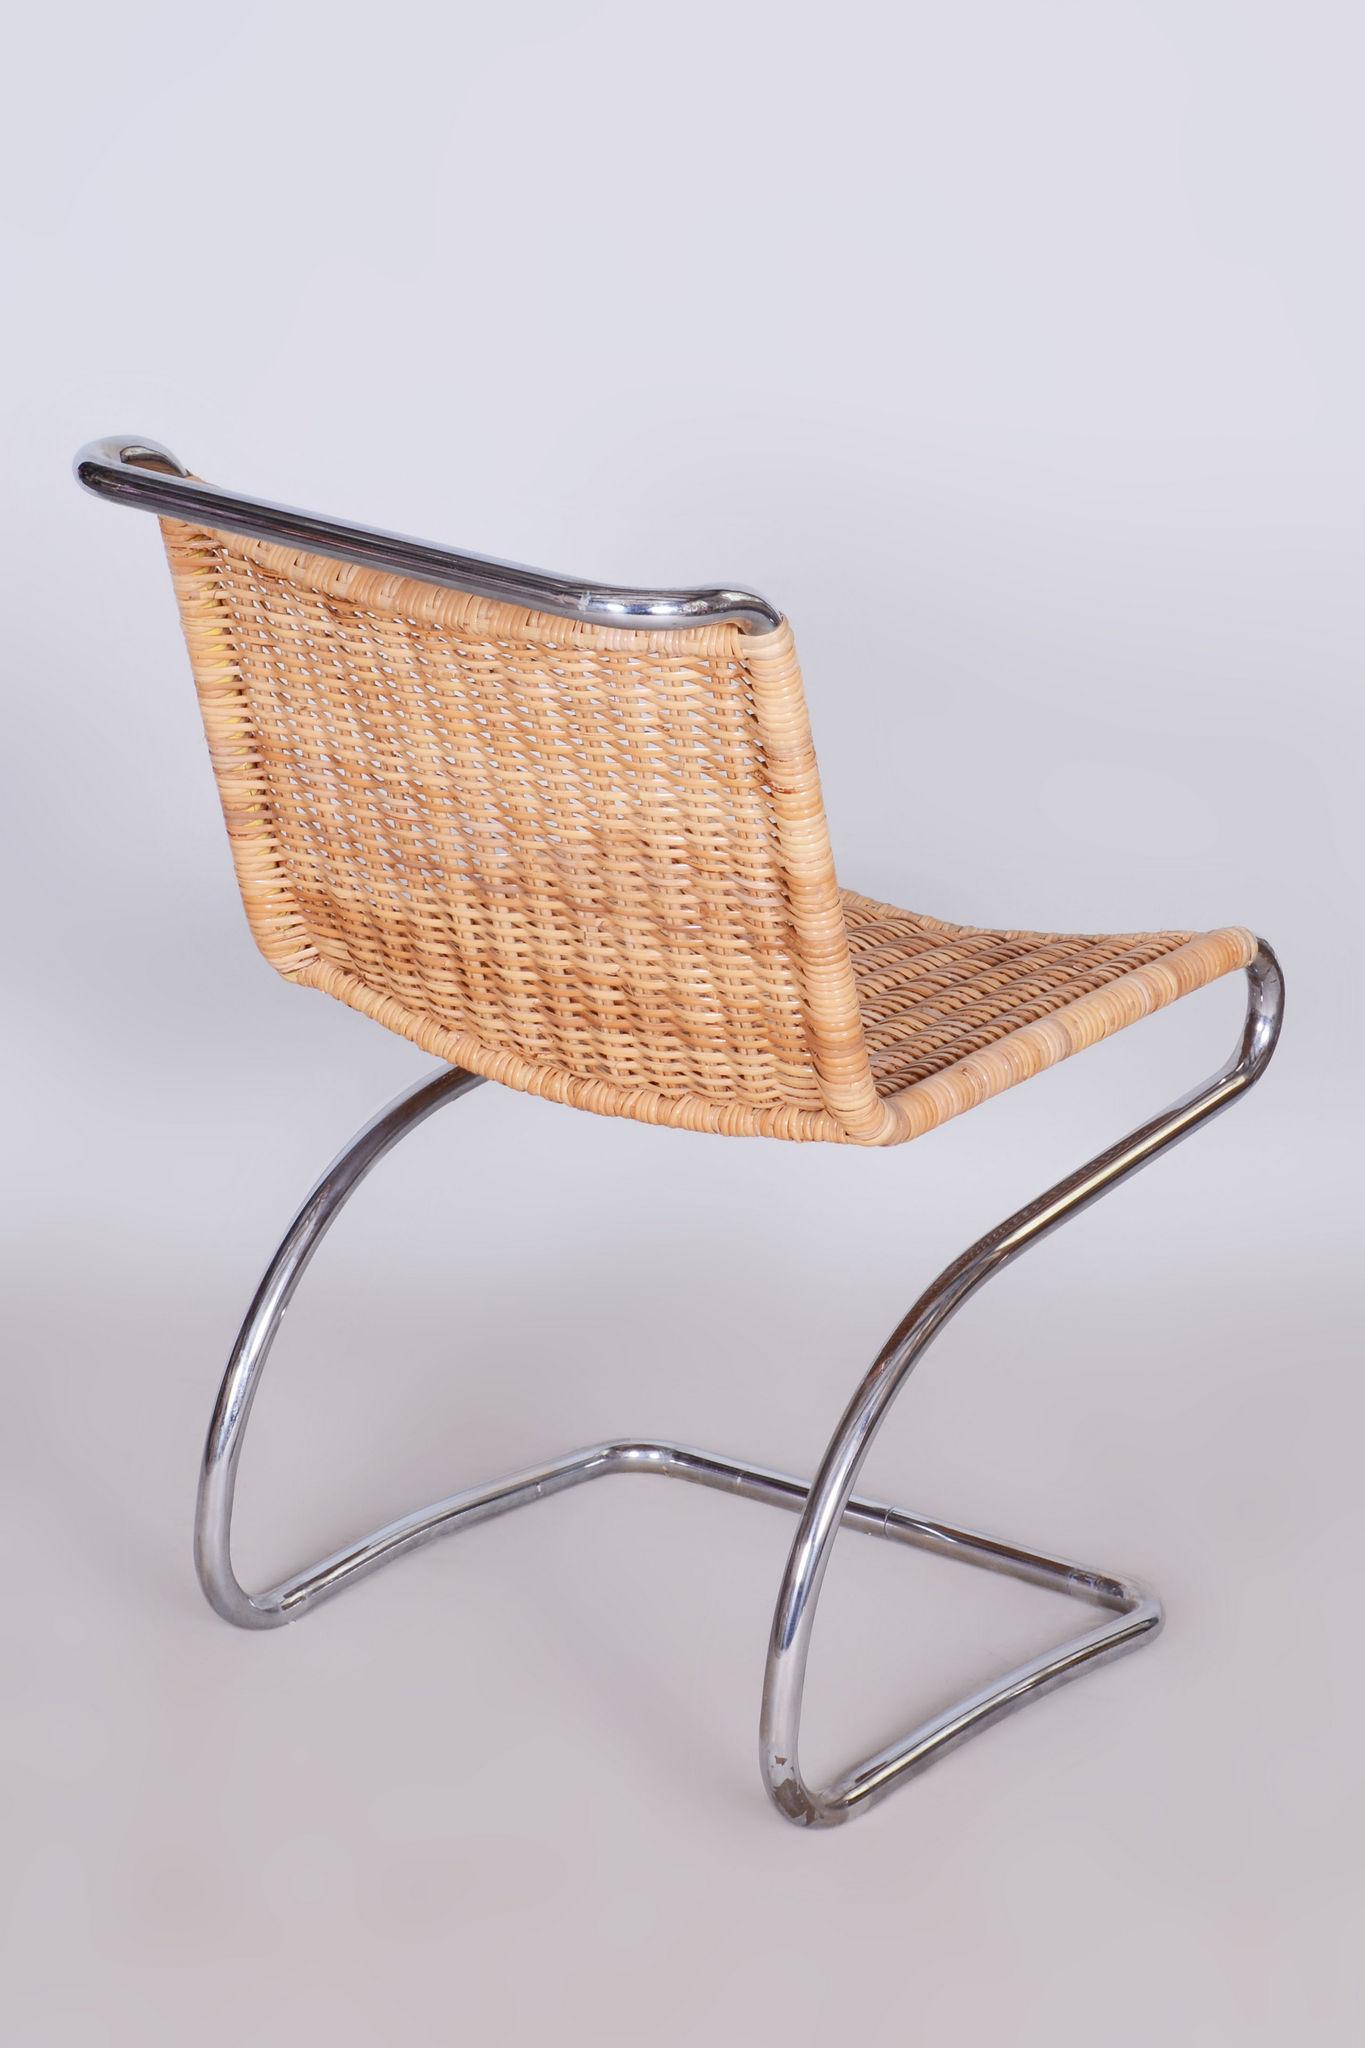 Steel Restored Bauhaus Set of Chairs, J. Halabala, UP Zavody, Chrome, Czechia, 1930s For Sale